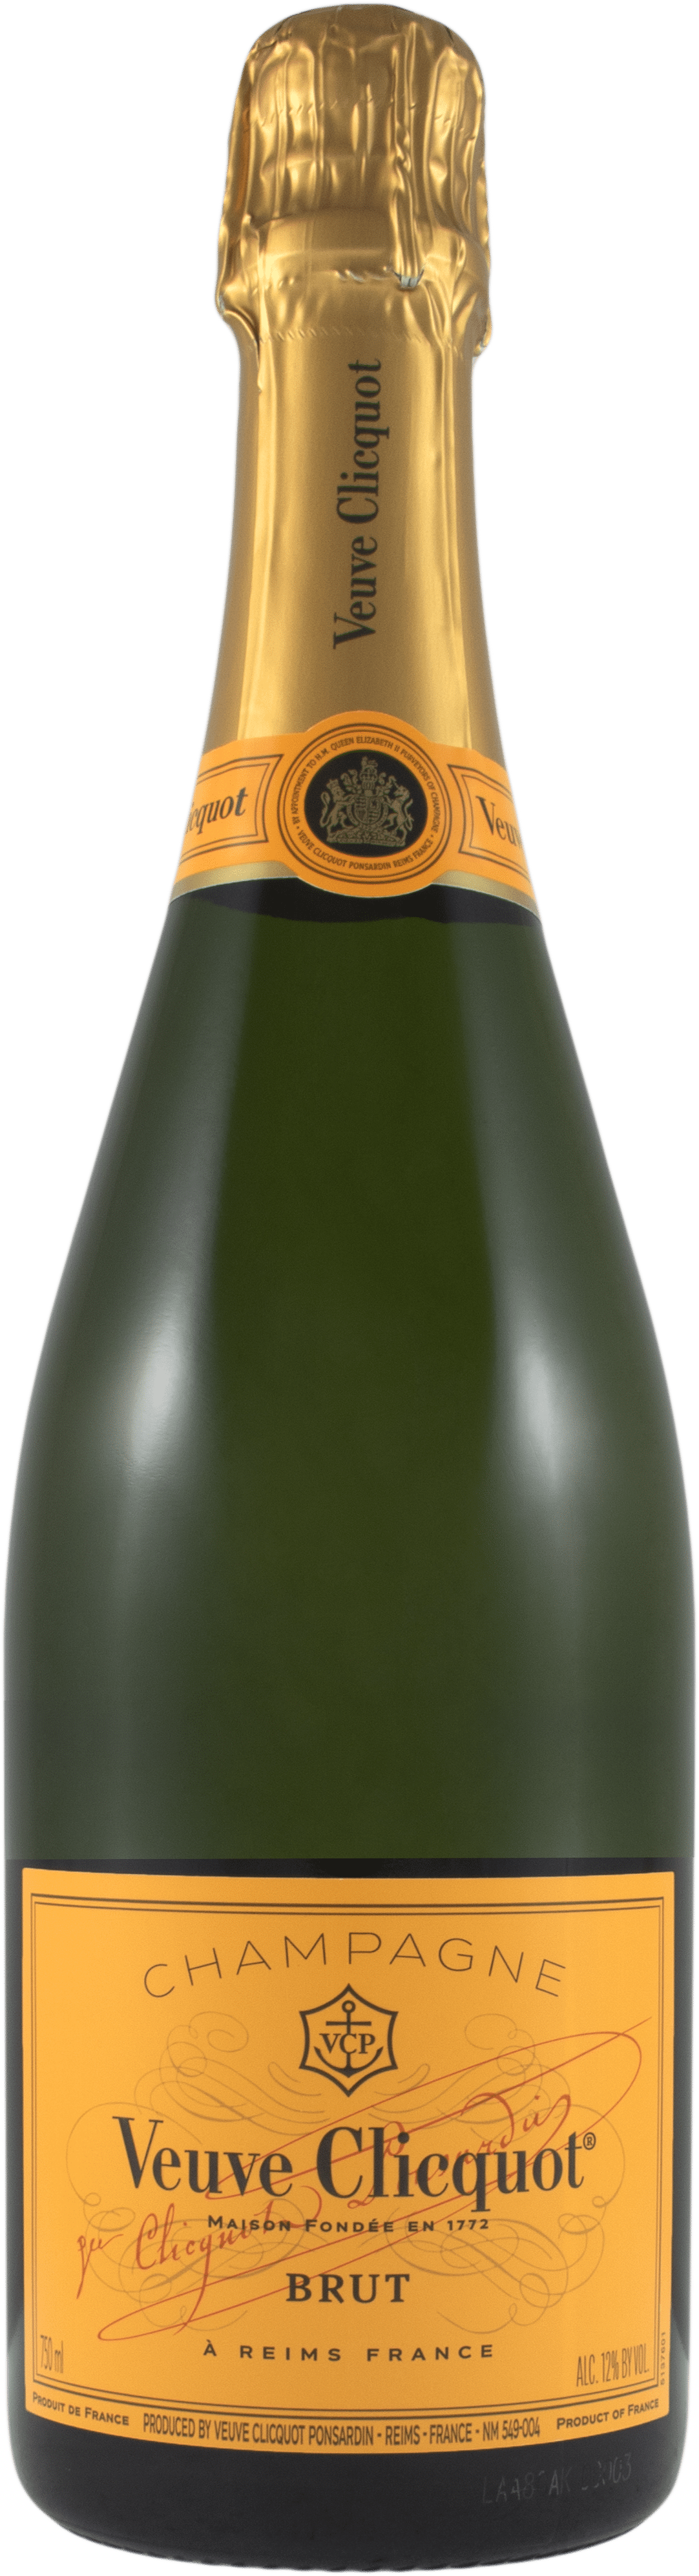 Veuve Clicquot Brut